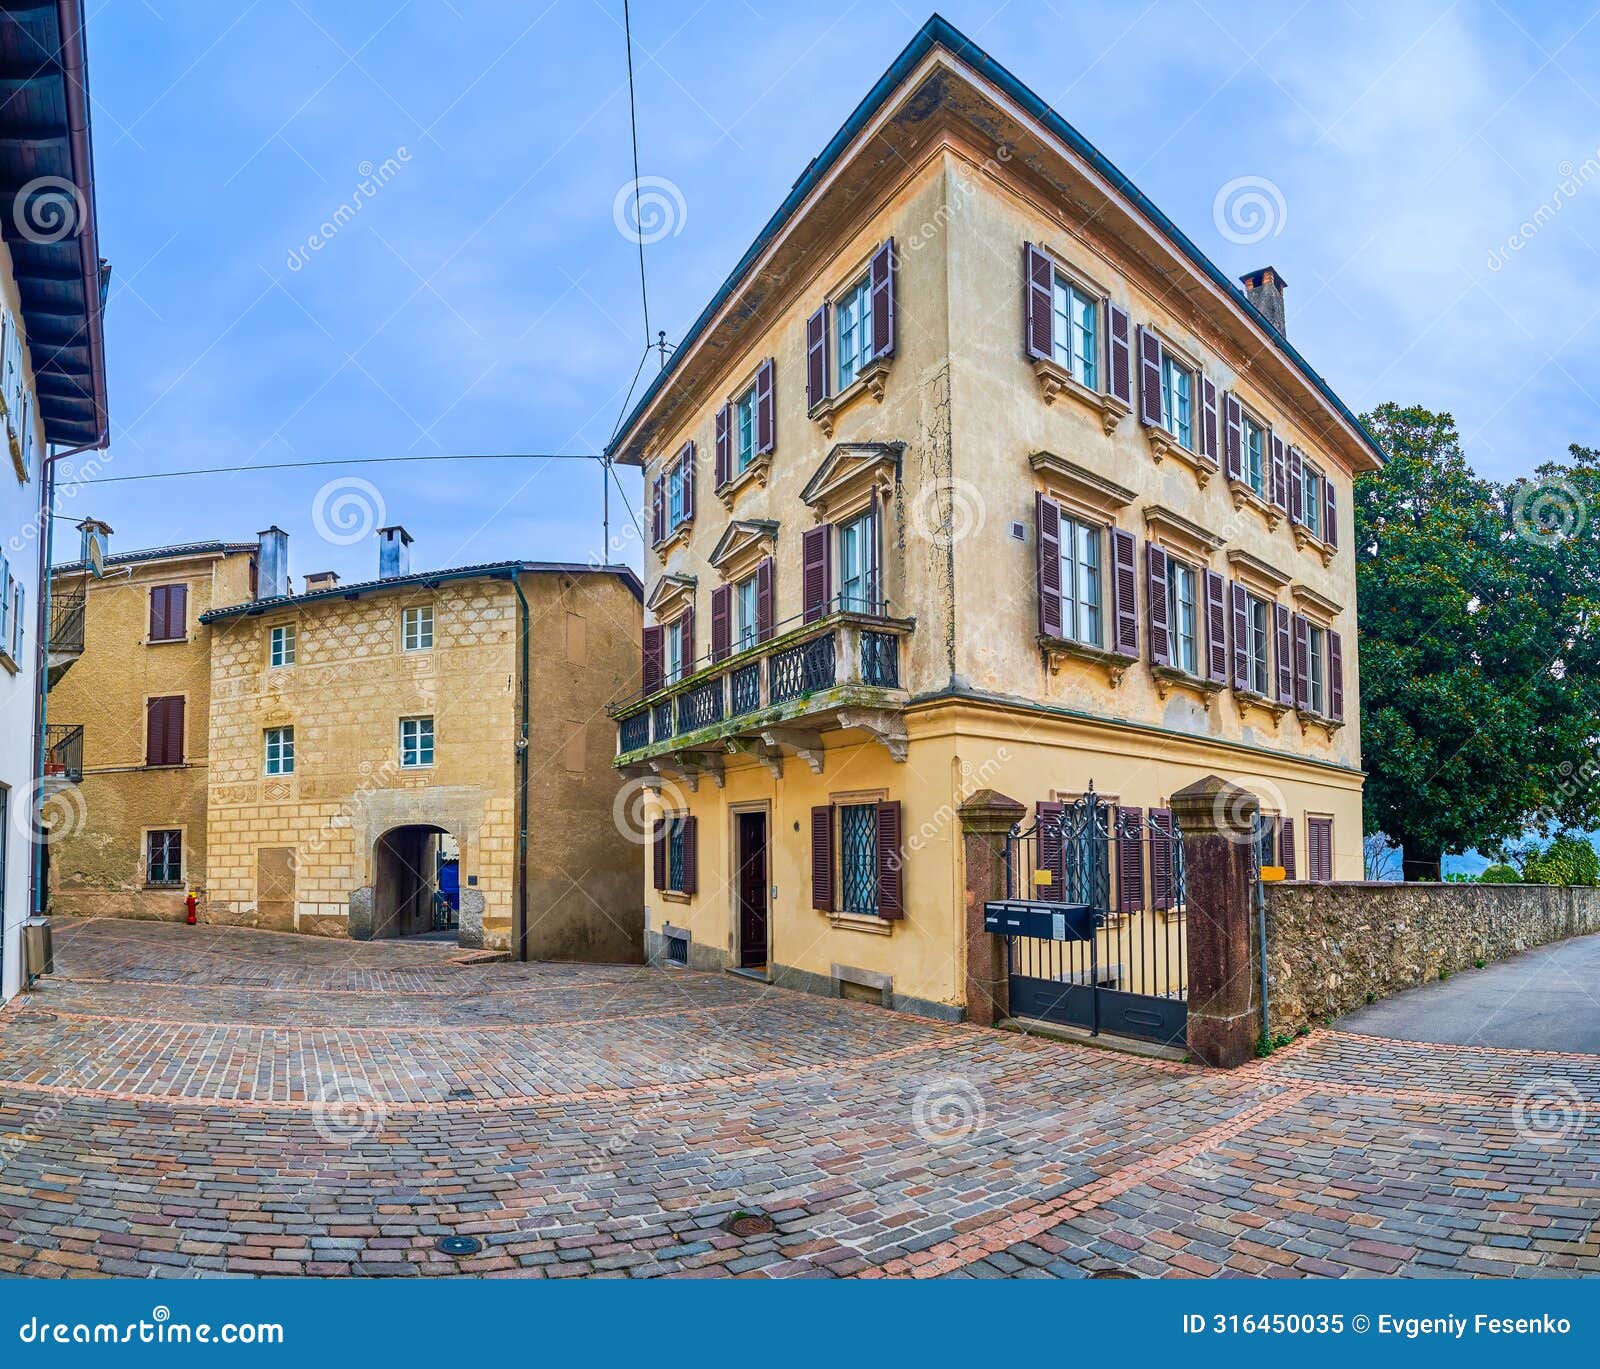 residential mansion in small historic village gentilino, collina d'oro, switzerland